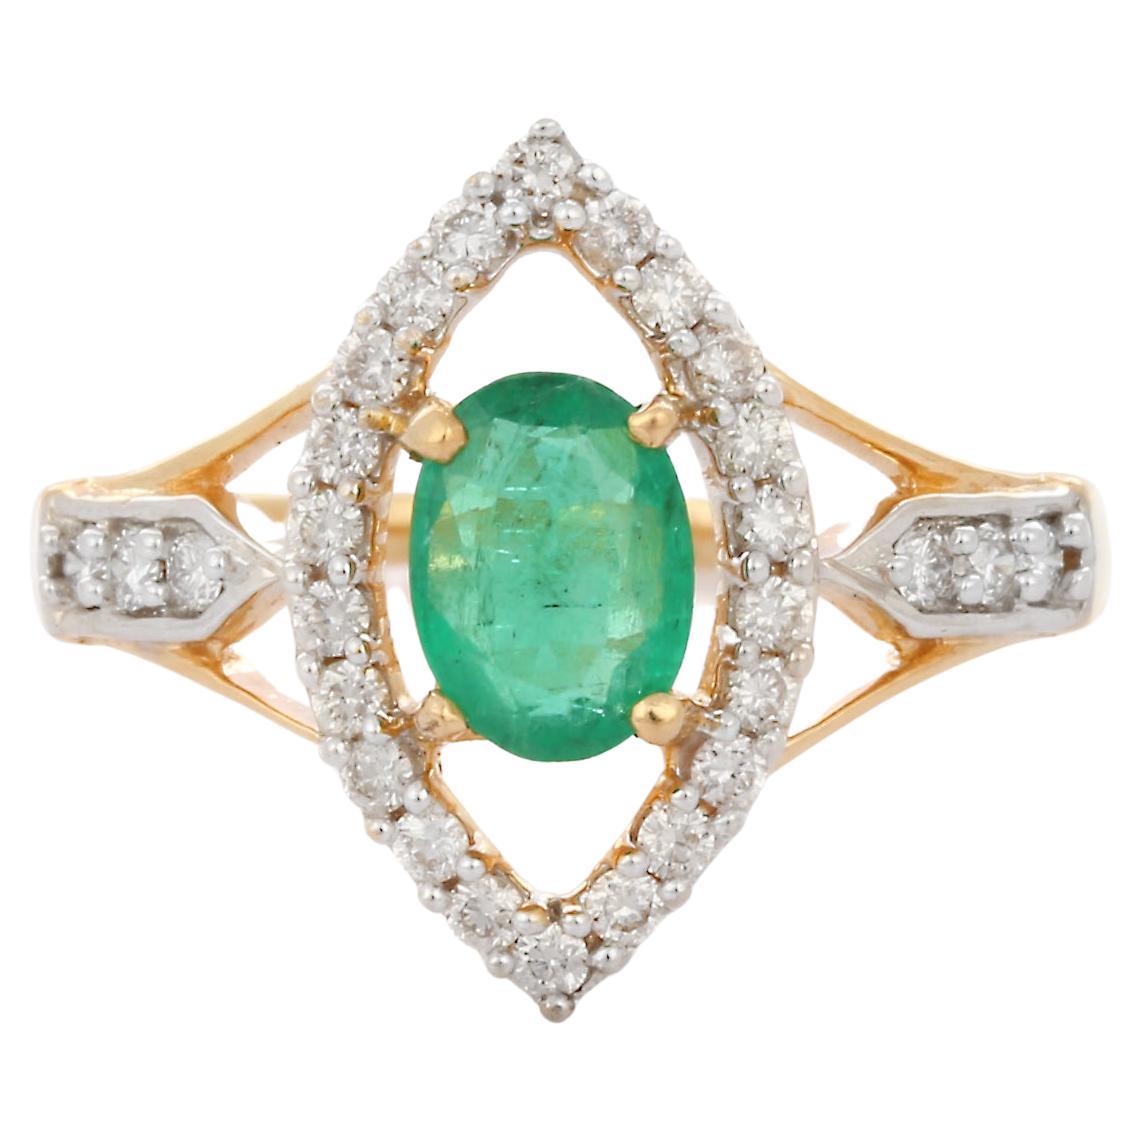 Designer Emerald Diamond Wedding Ring Cocktail Ring in 18K White Gold